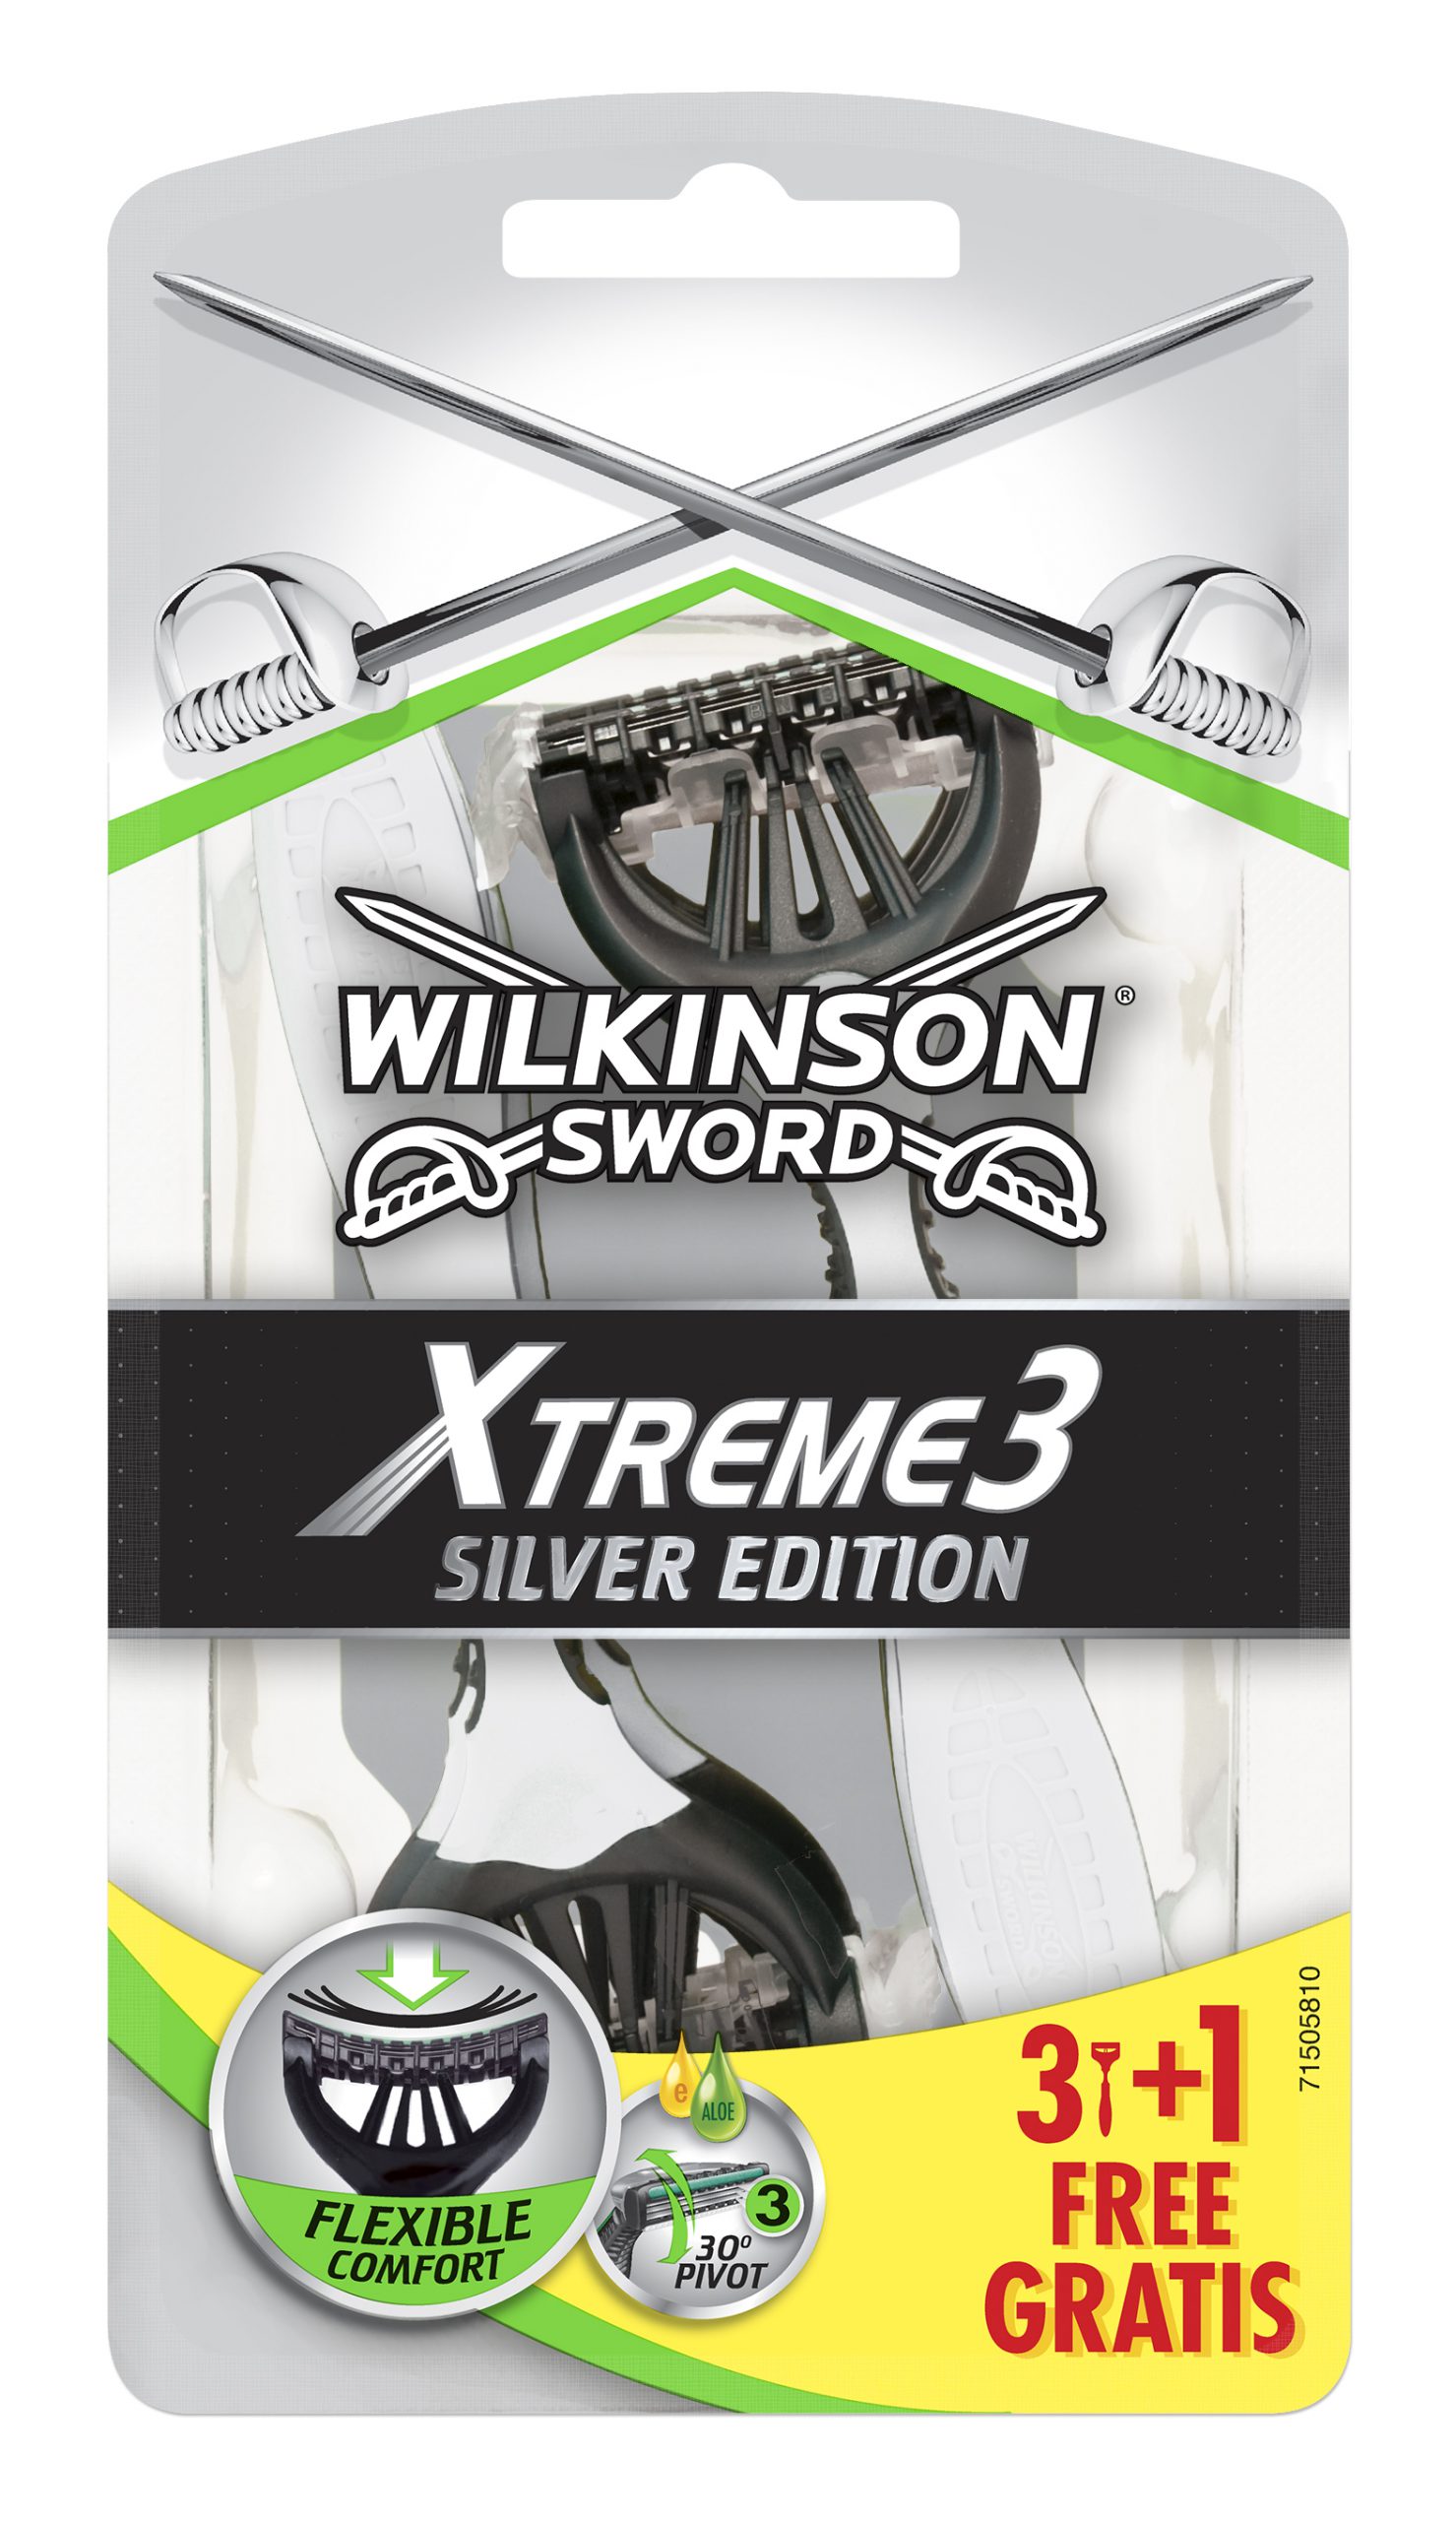 Golenie na medal z Wilkinson Xtreme3 Silver Edition